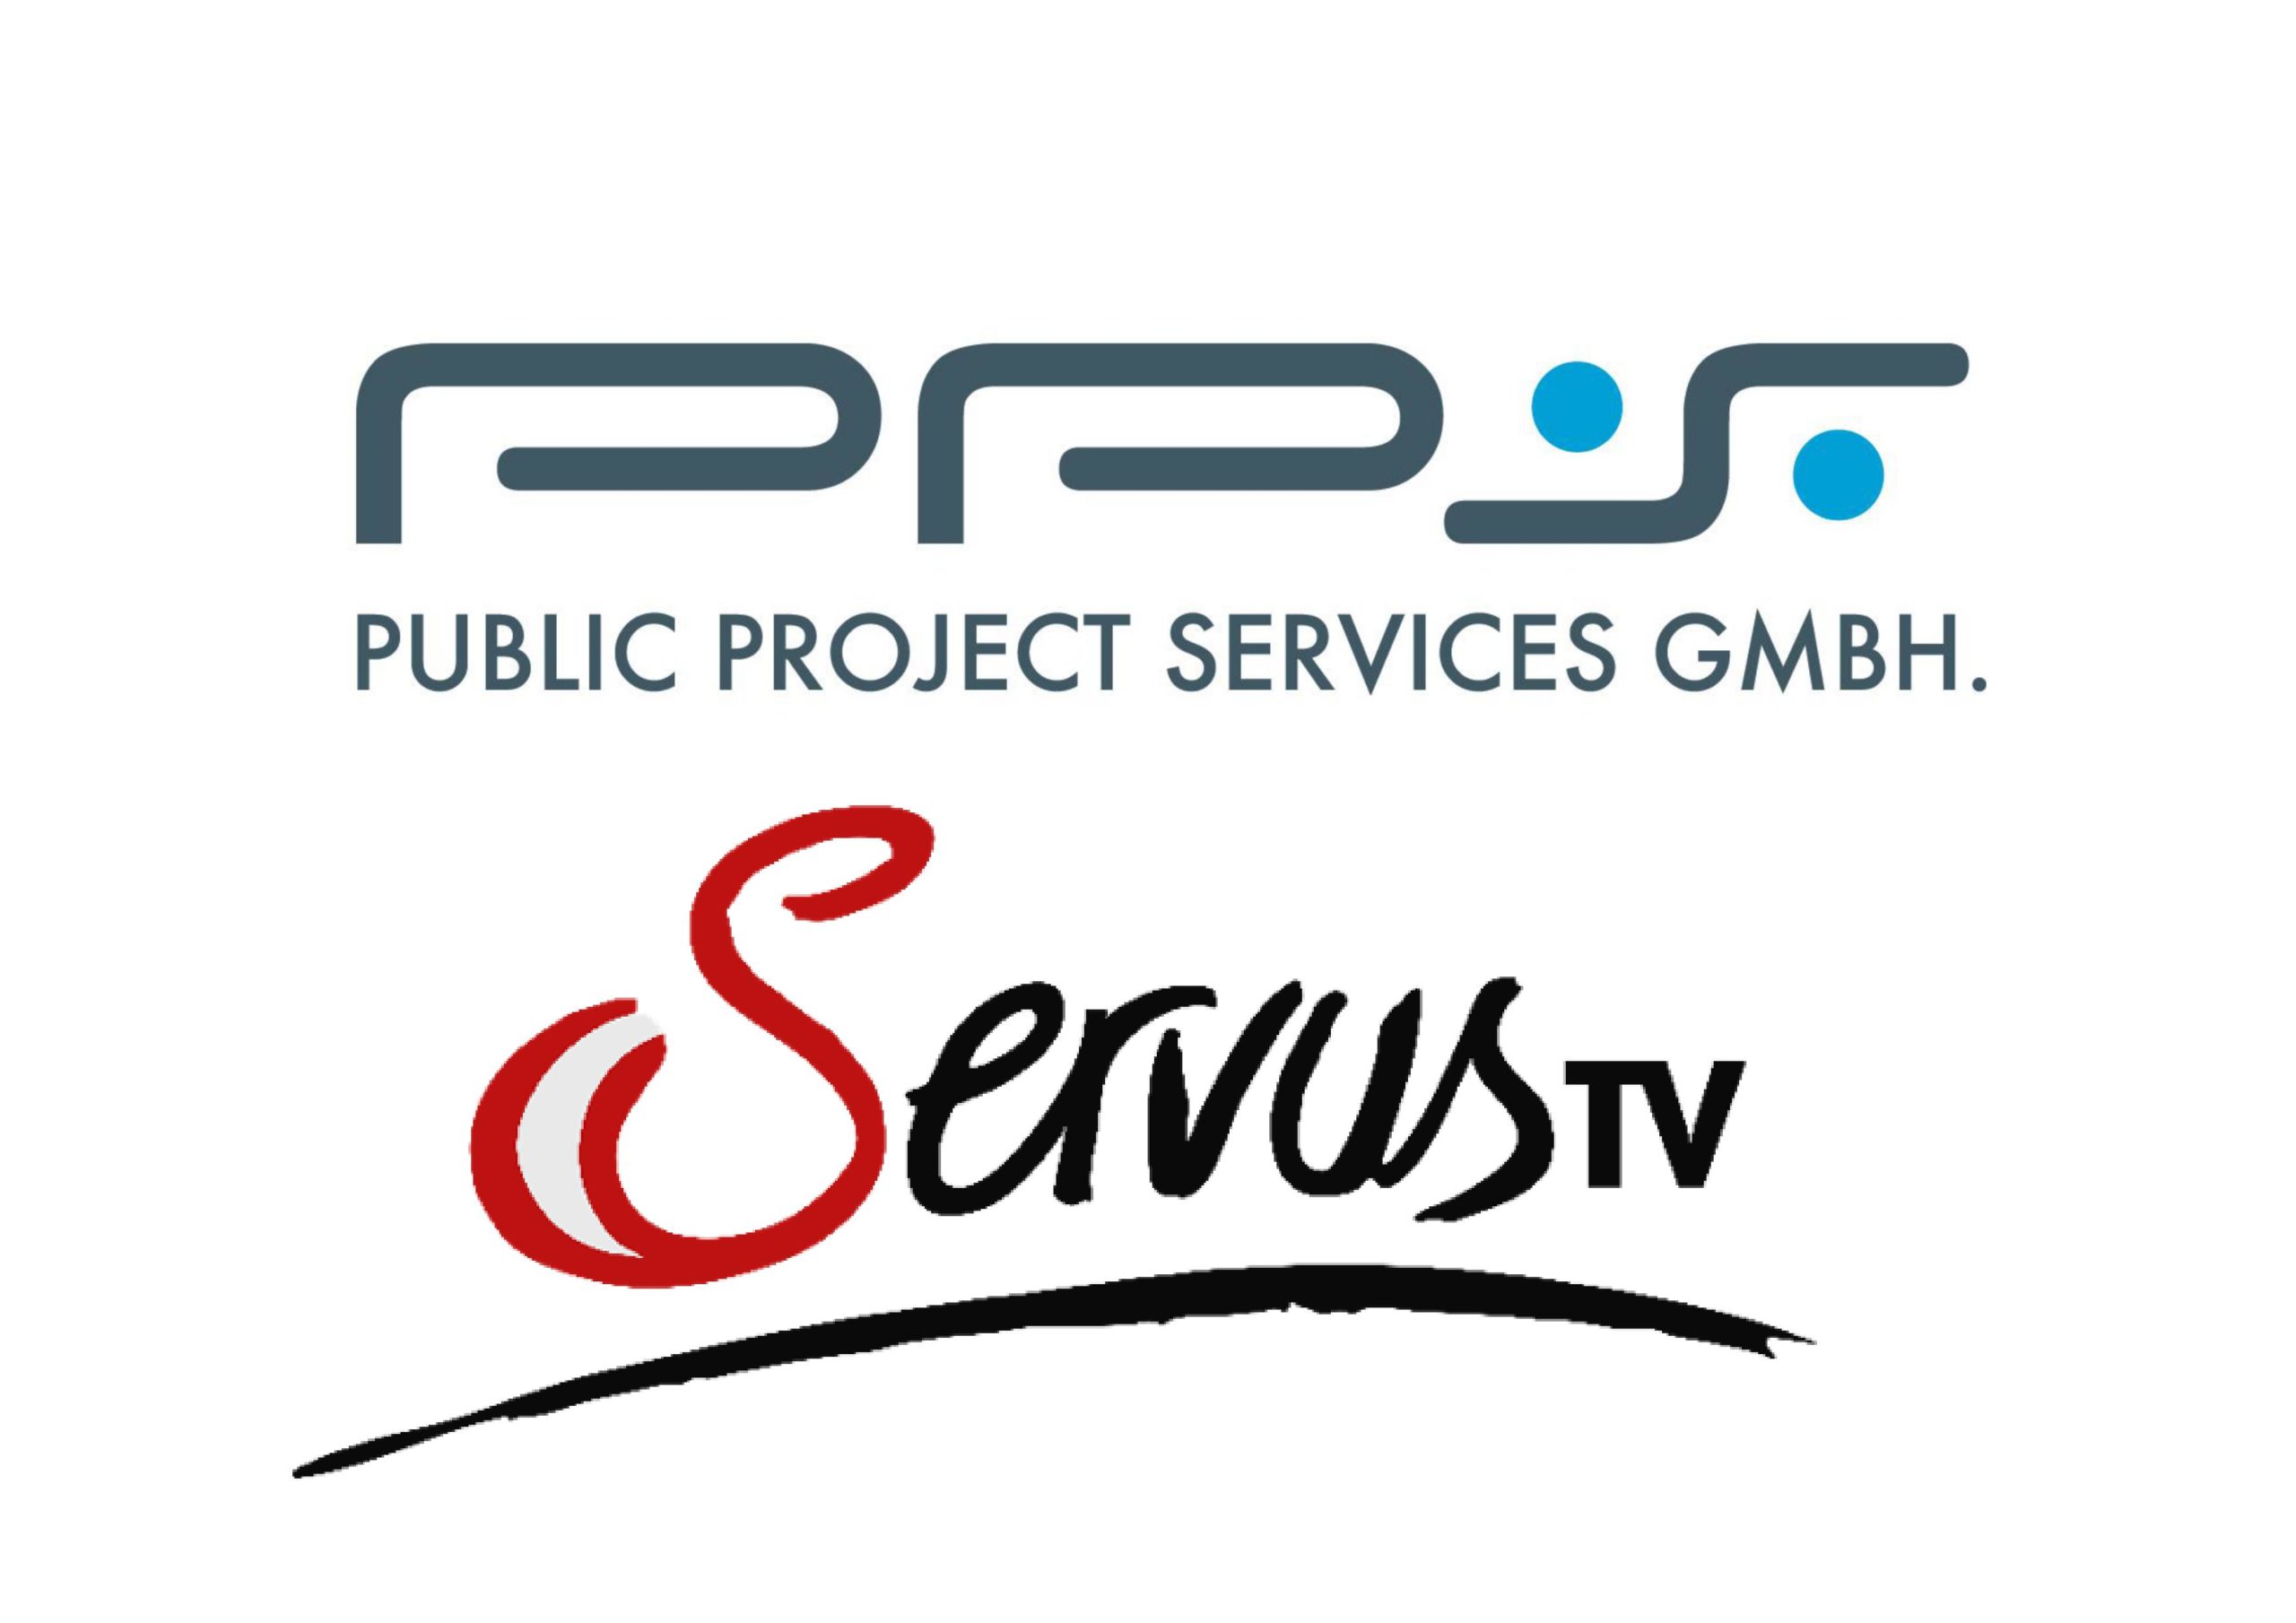 PPS Public Project Services GmbH